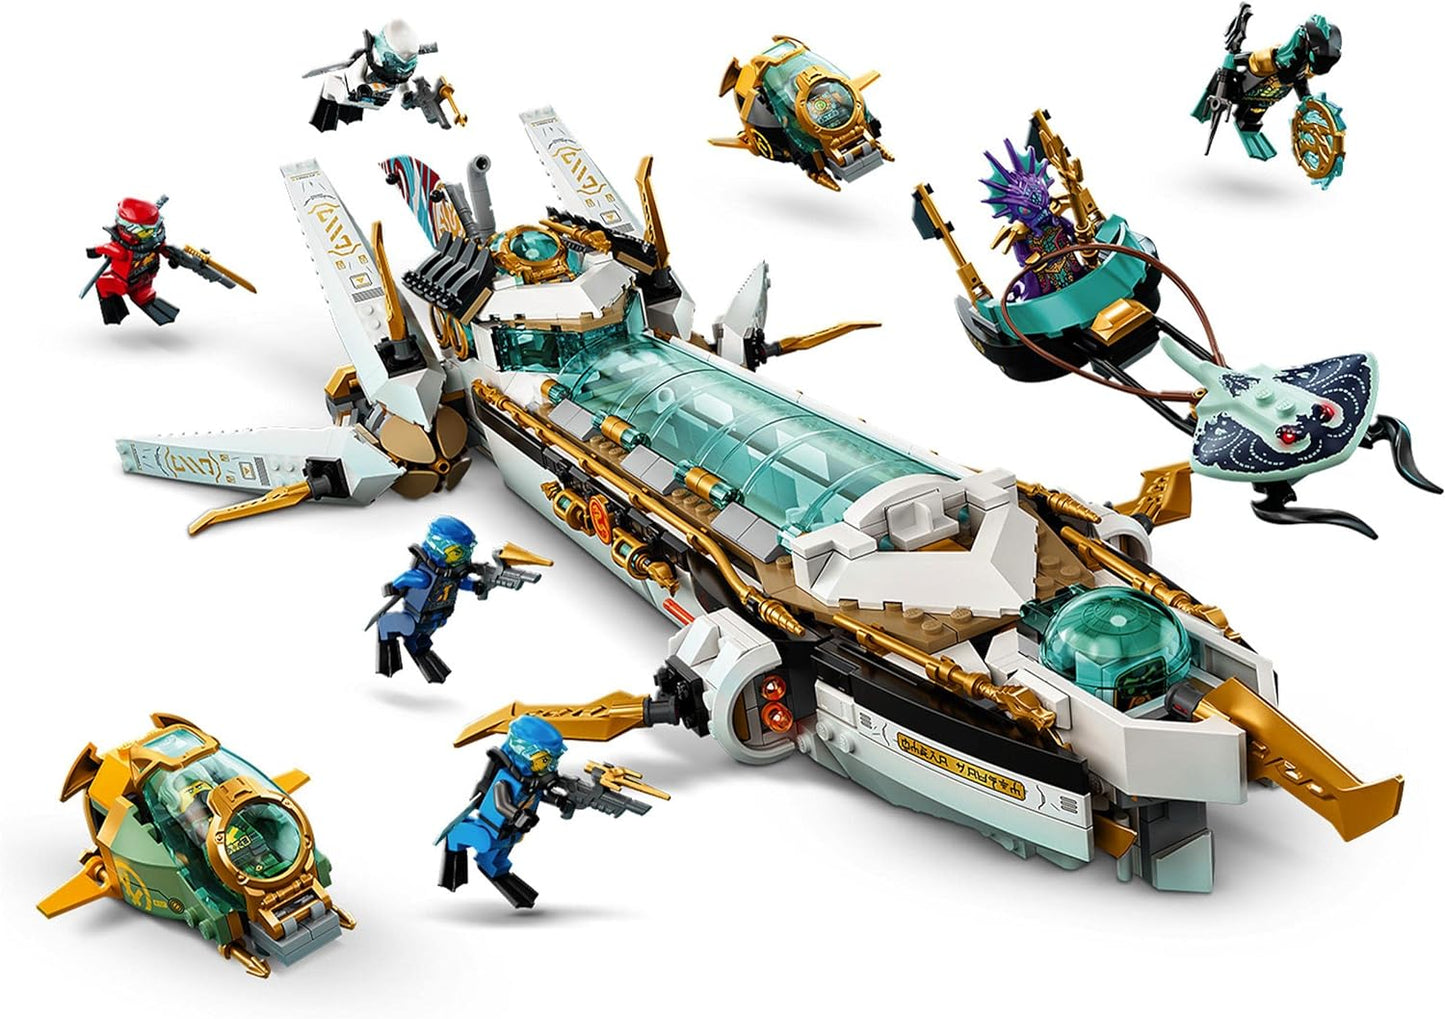 LEGO 71756 NINJAGO Hydro Bounty Building Set, Submarine Toy with Kai and NYA Minifigures, Ninja Toys for Kids 9+ Years Old